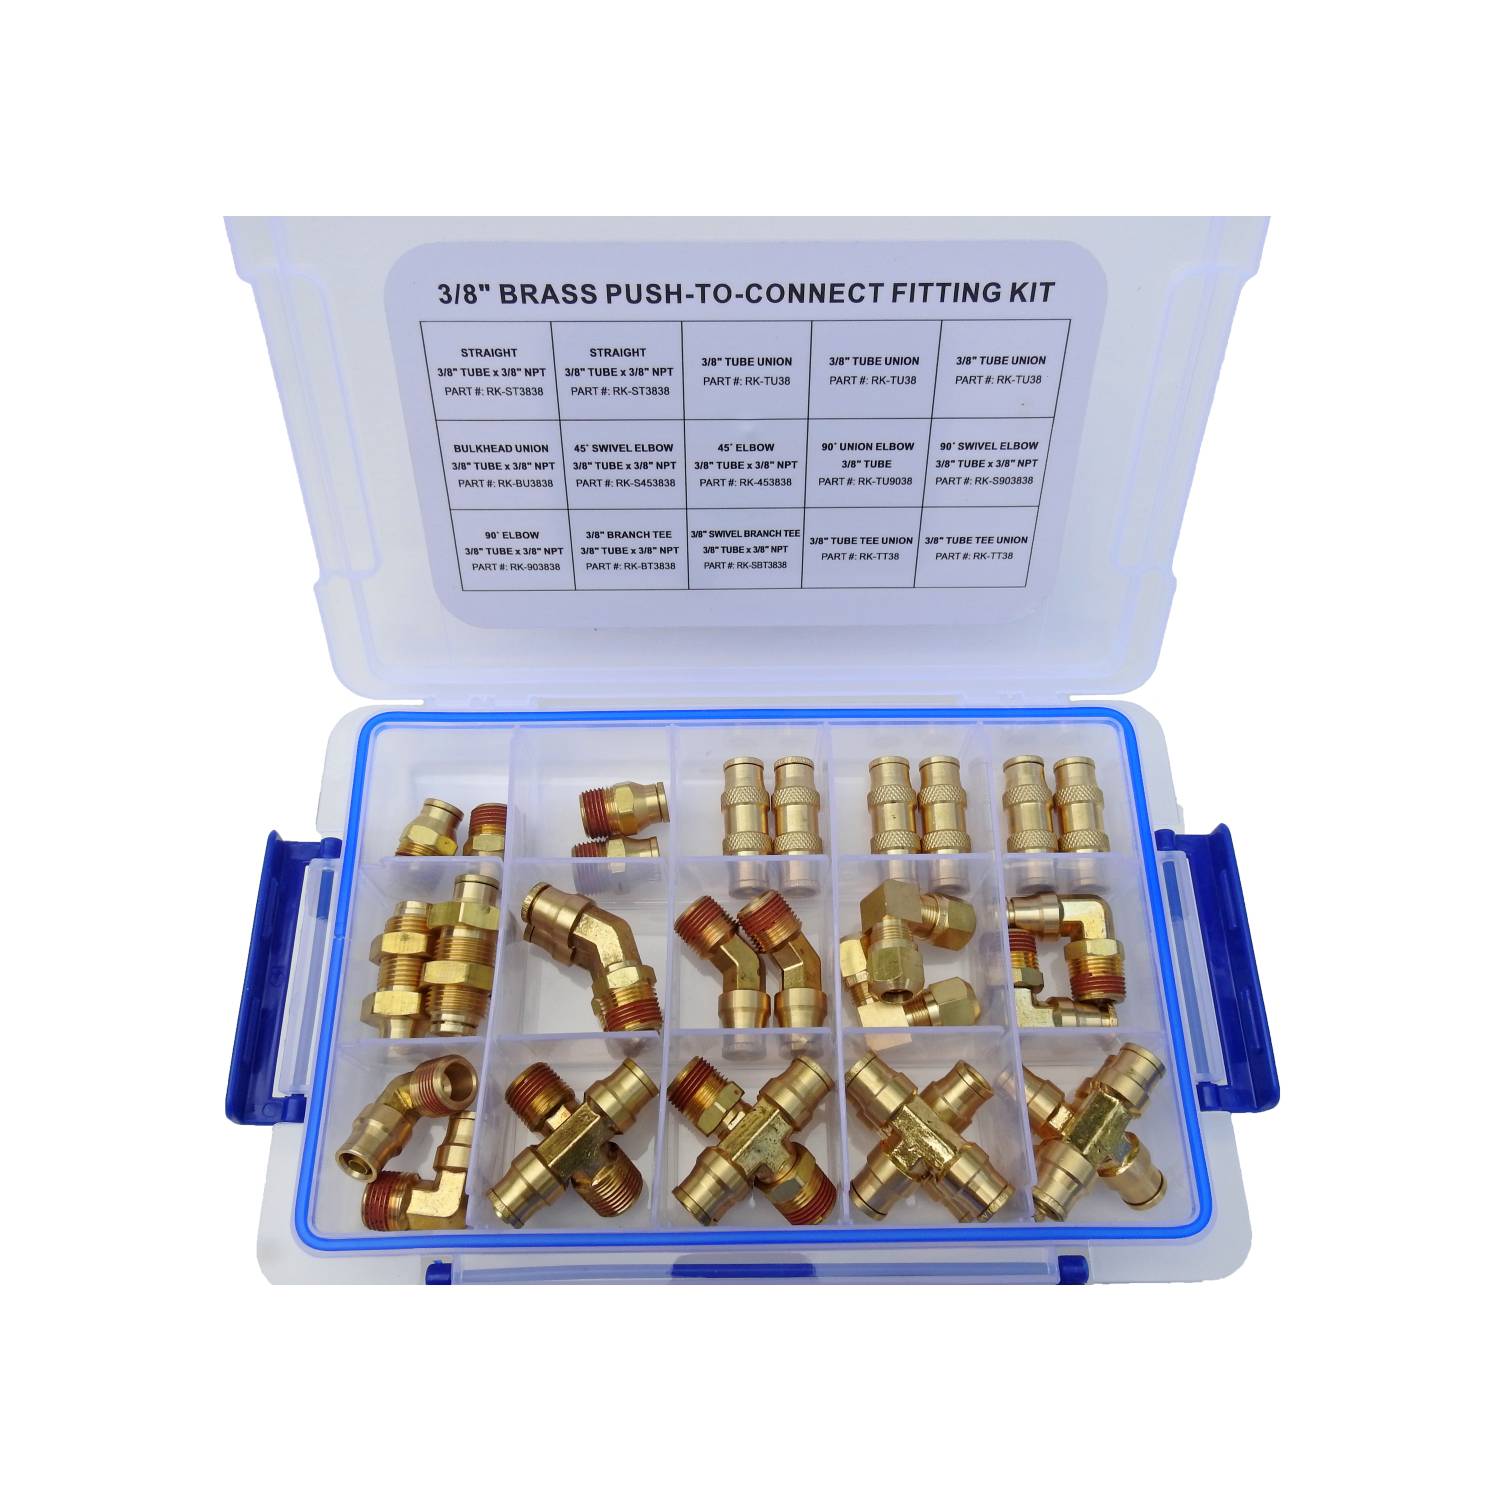 3/8” Asst Push Lock Brass Air Line Fitting Kit, DOT Approved